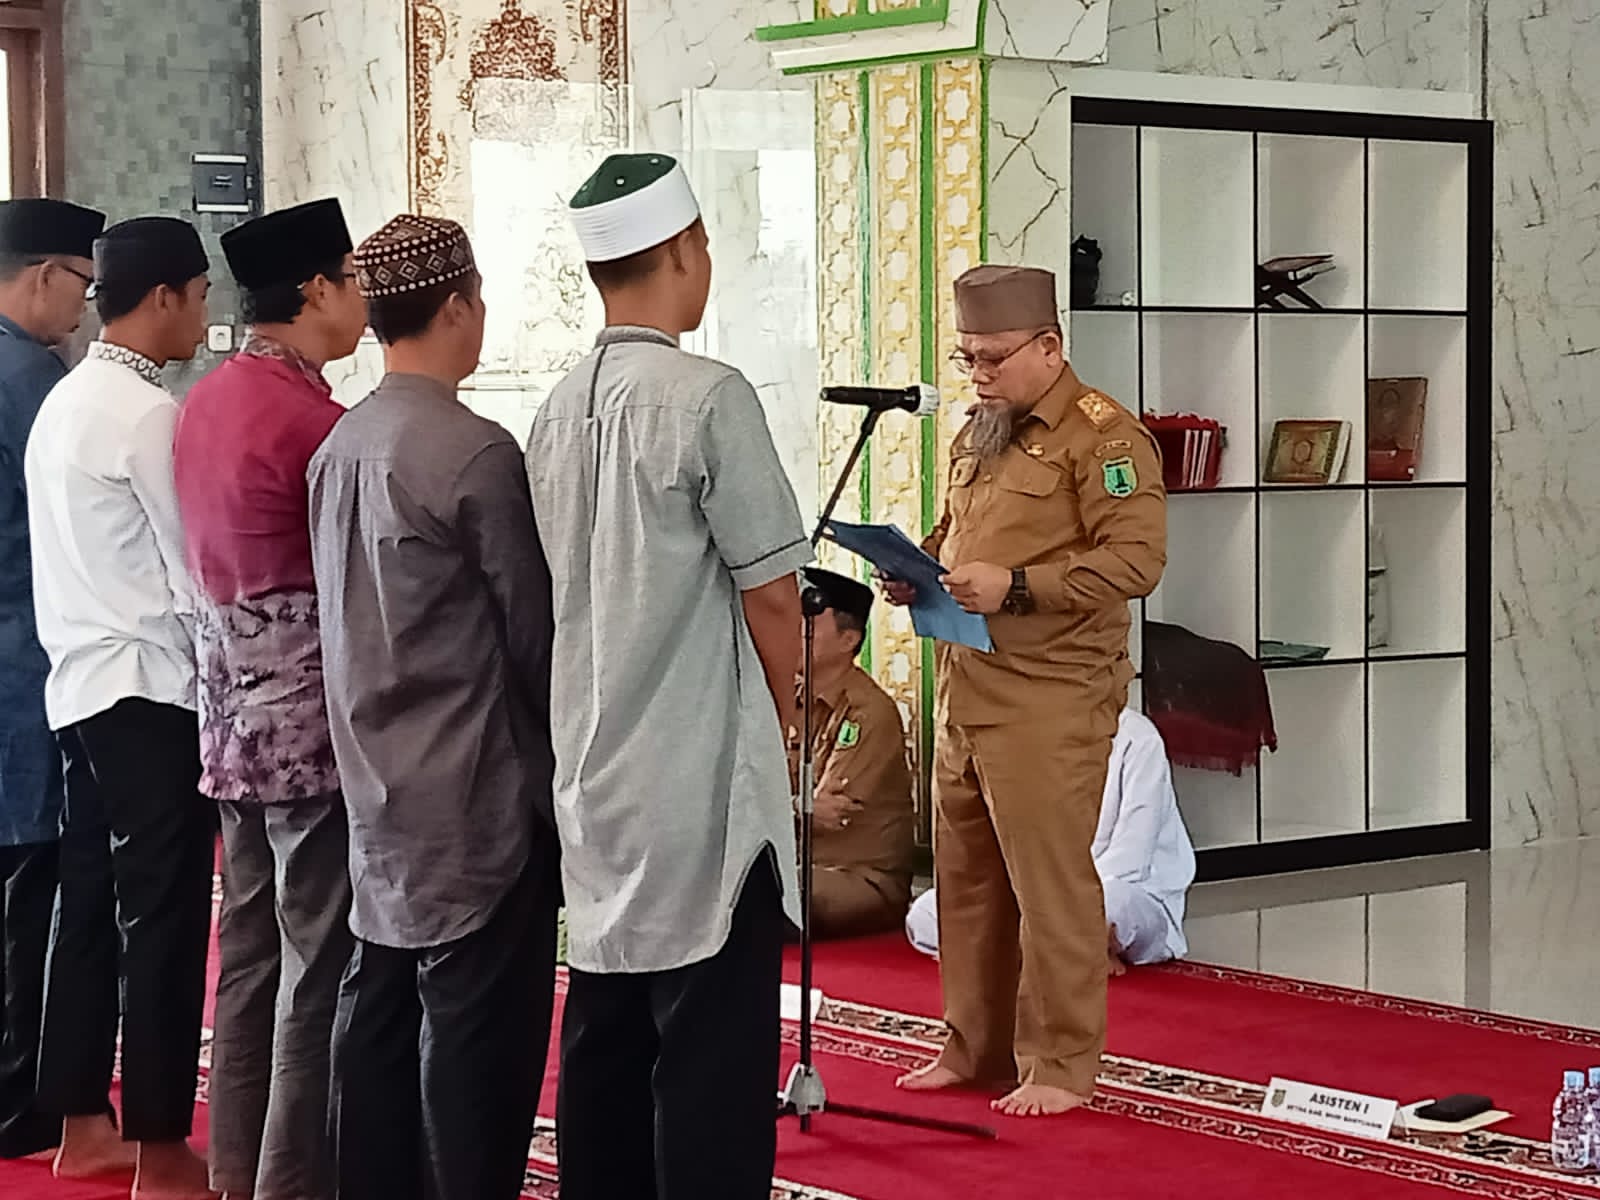 Masjid 1000 Dinar di Kelurahan Kayuara Diresmikan 